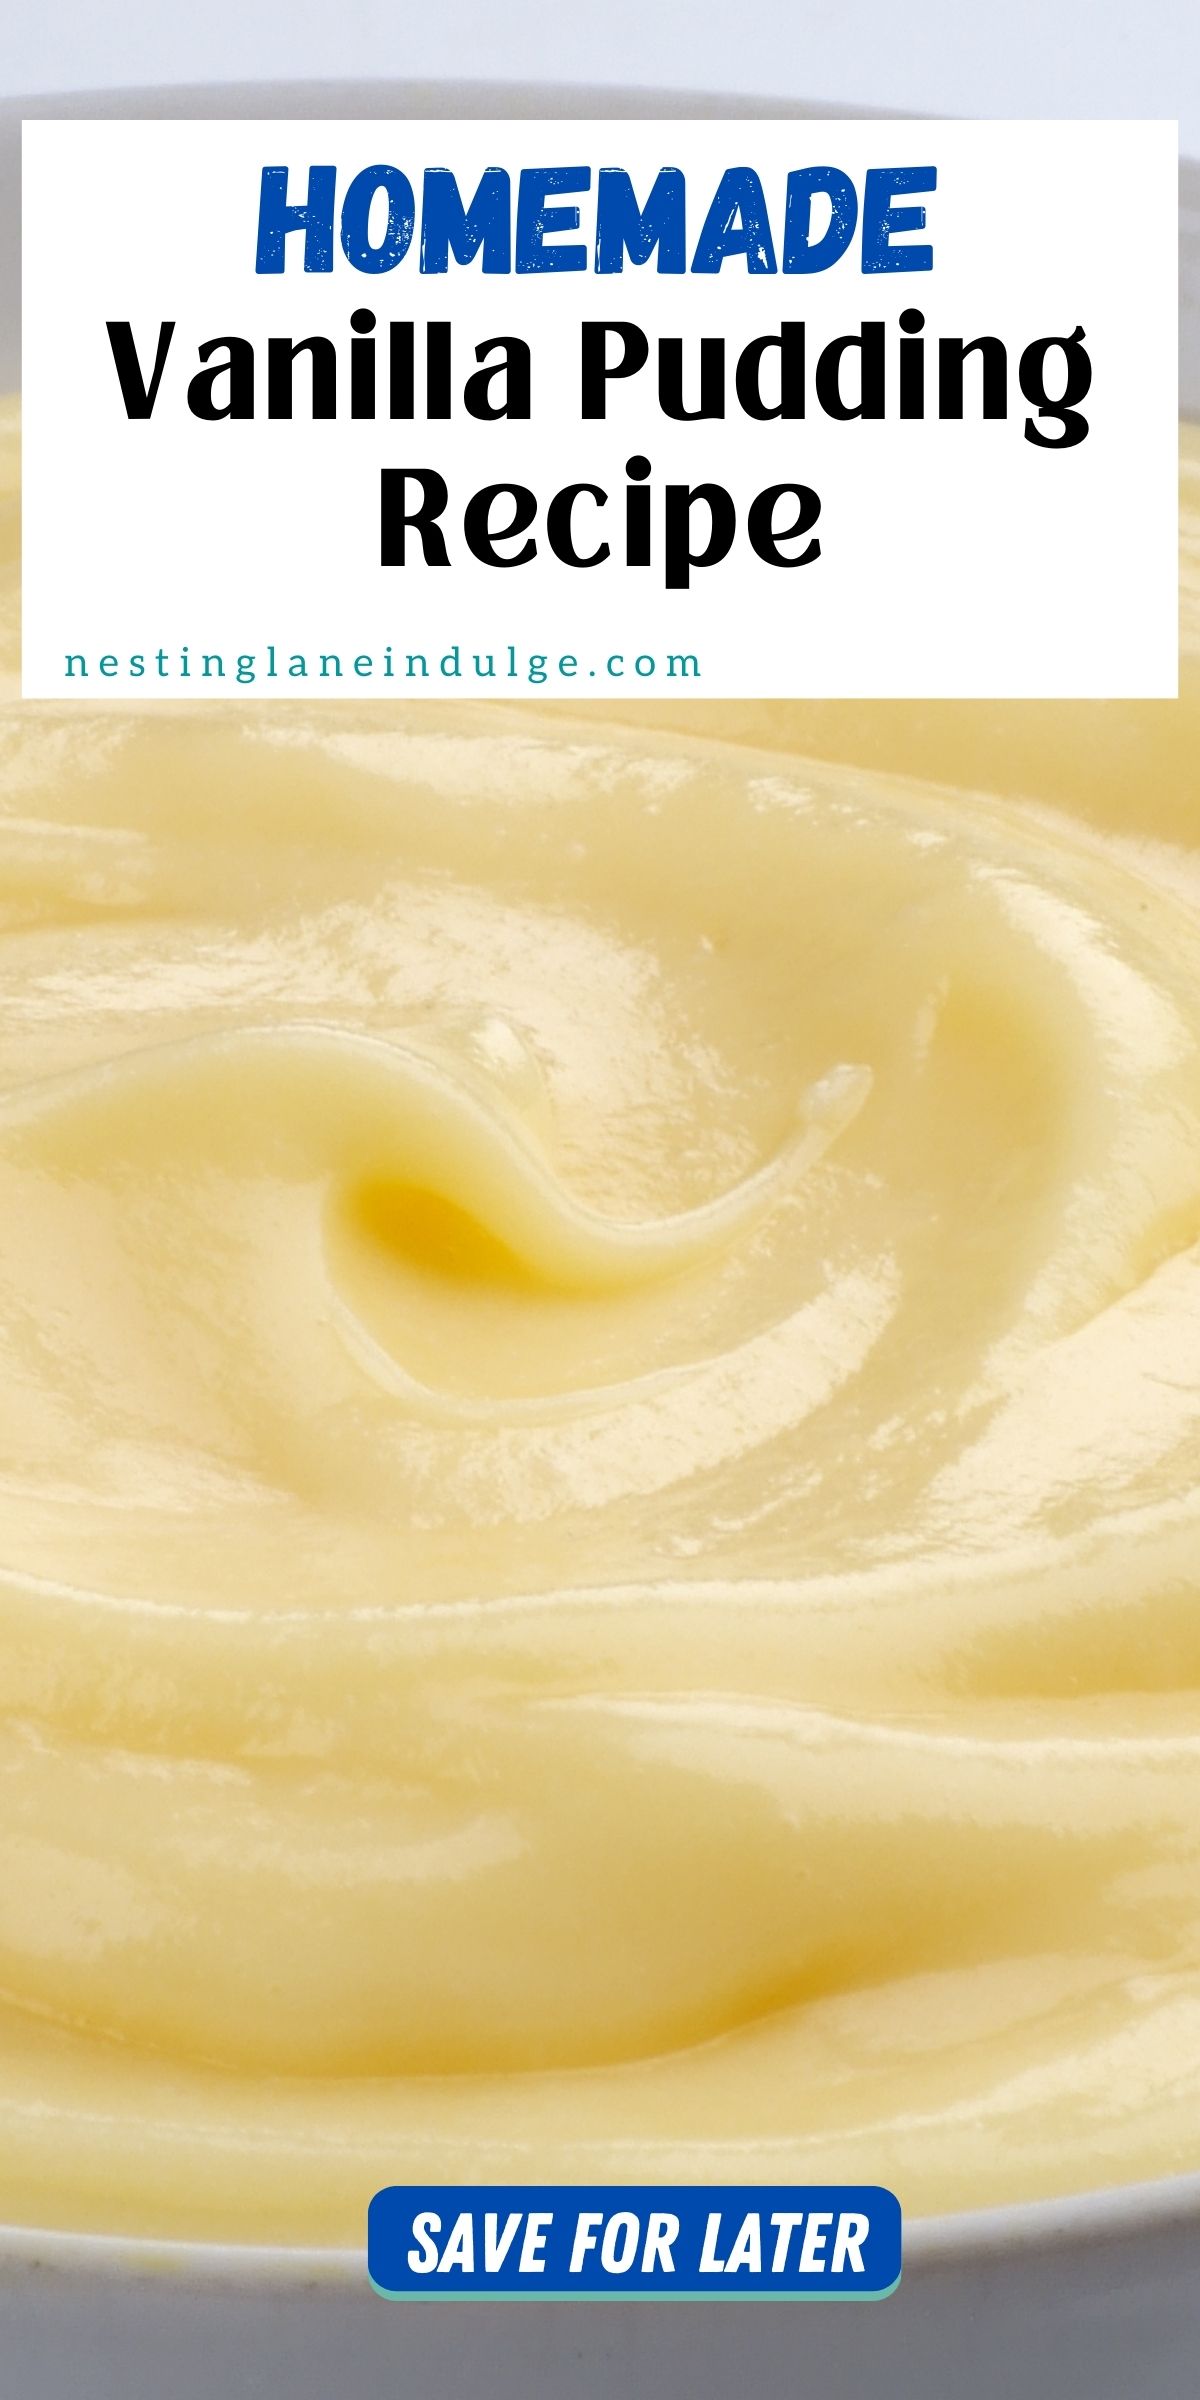 Homemade Vanilla Pudding graphic.